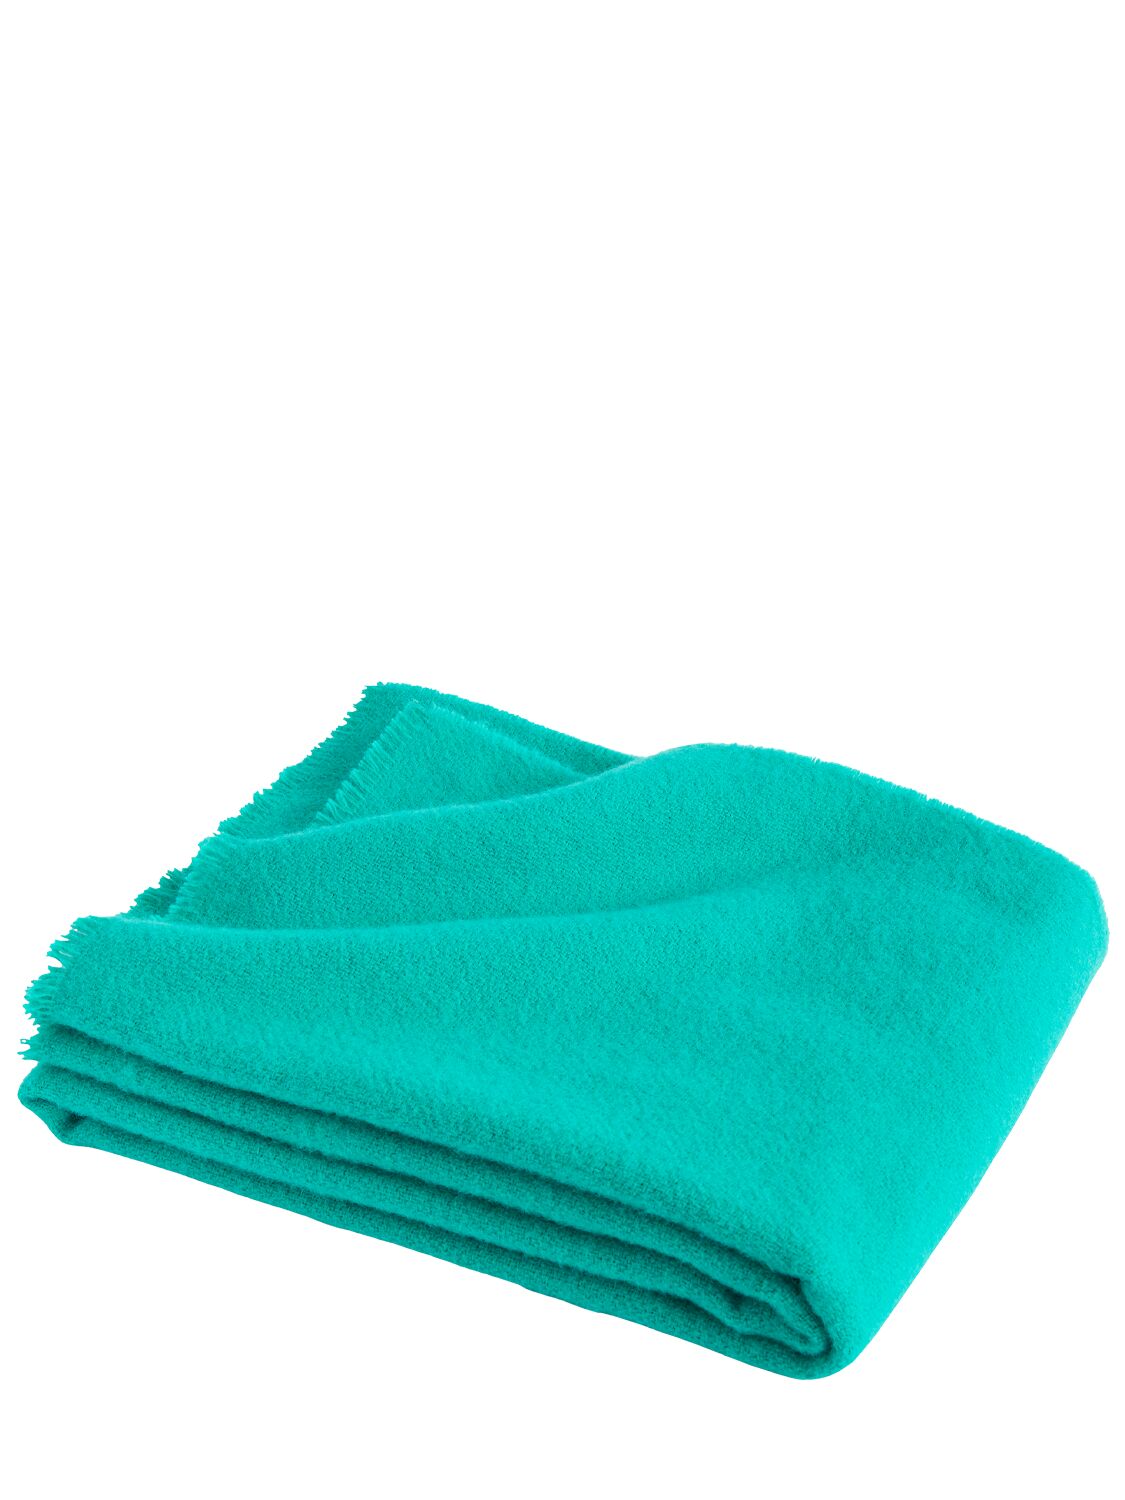 Hay Aqua Green Mono Blanket